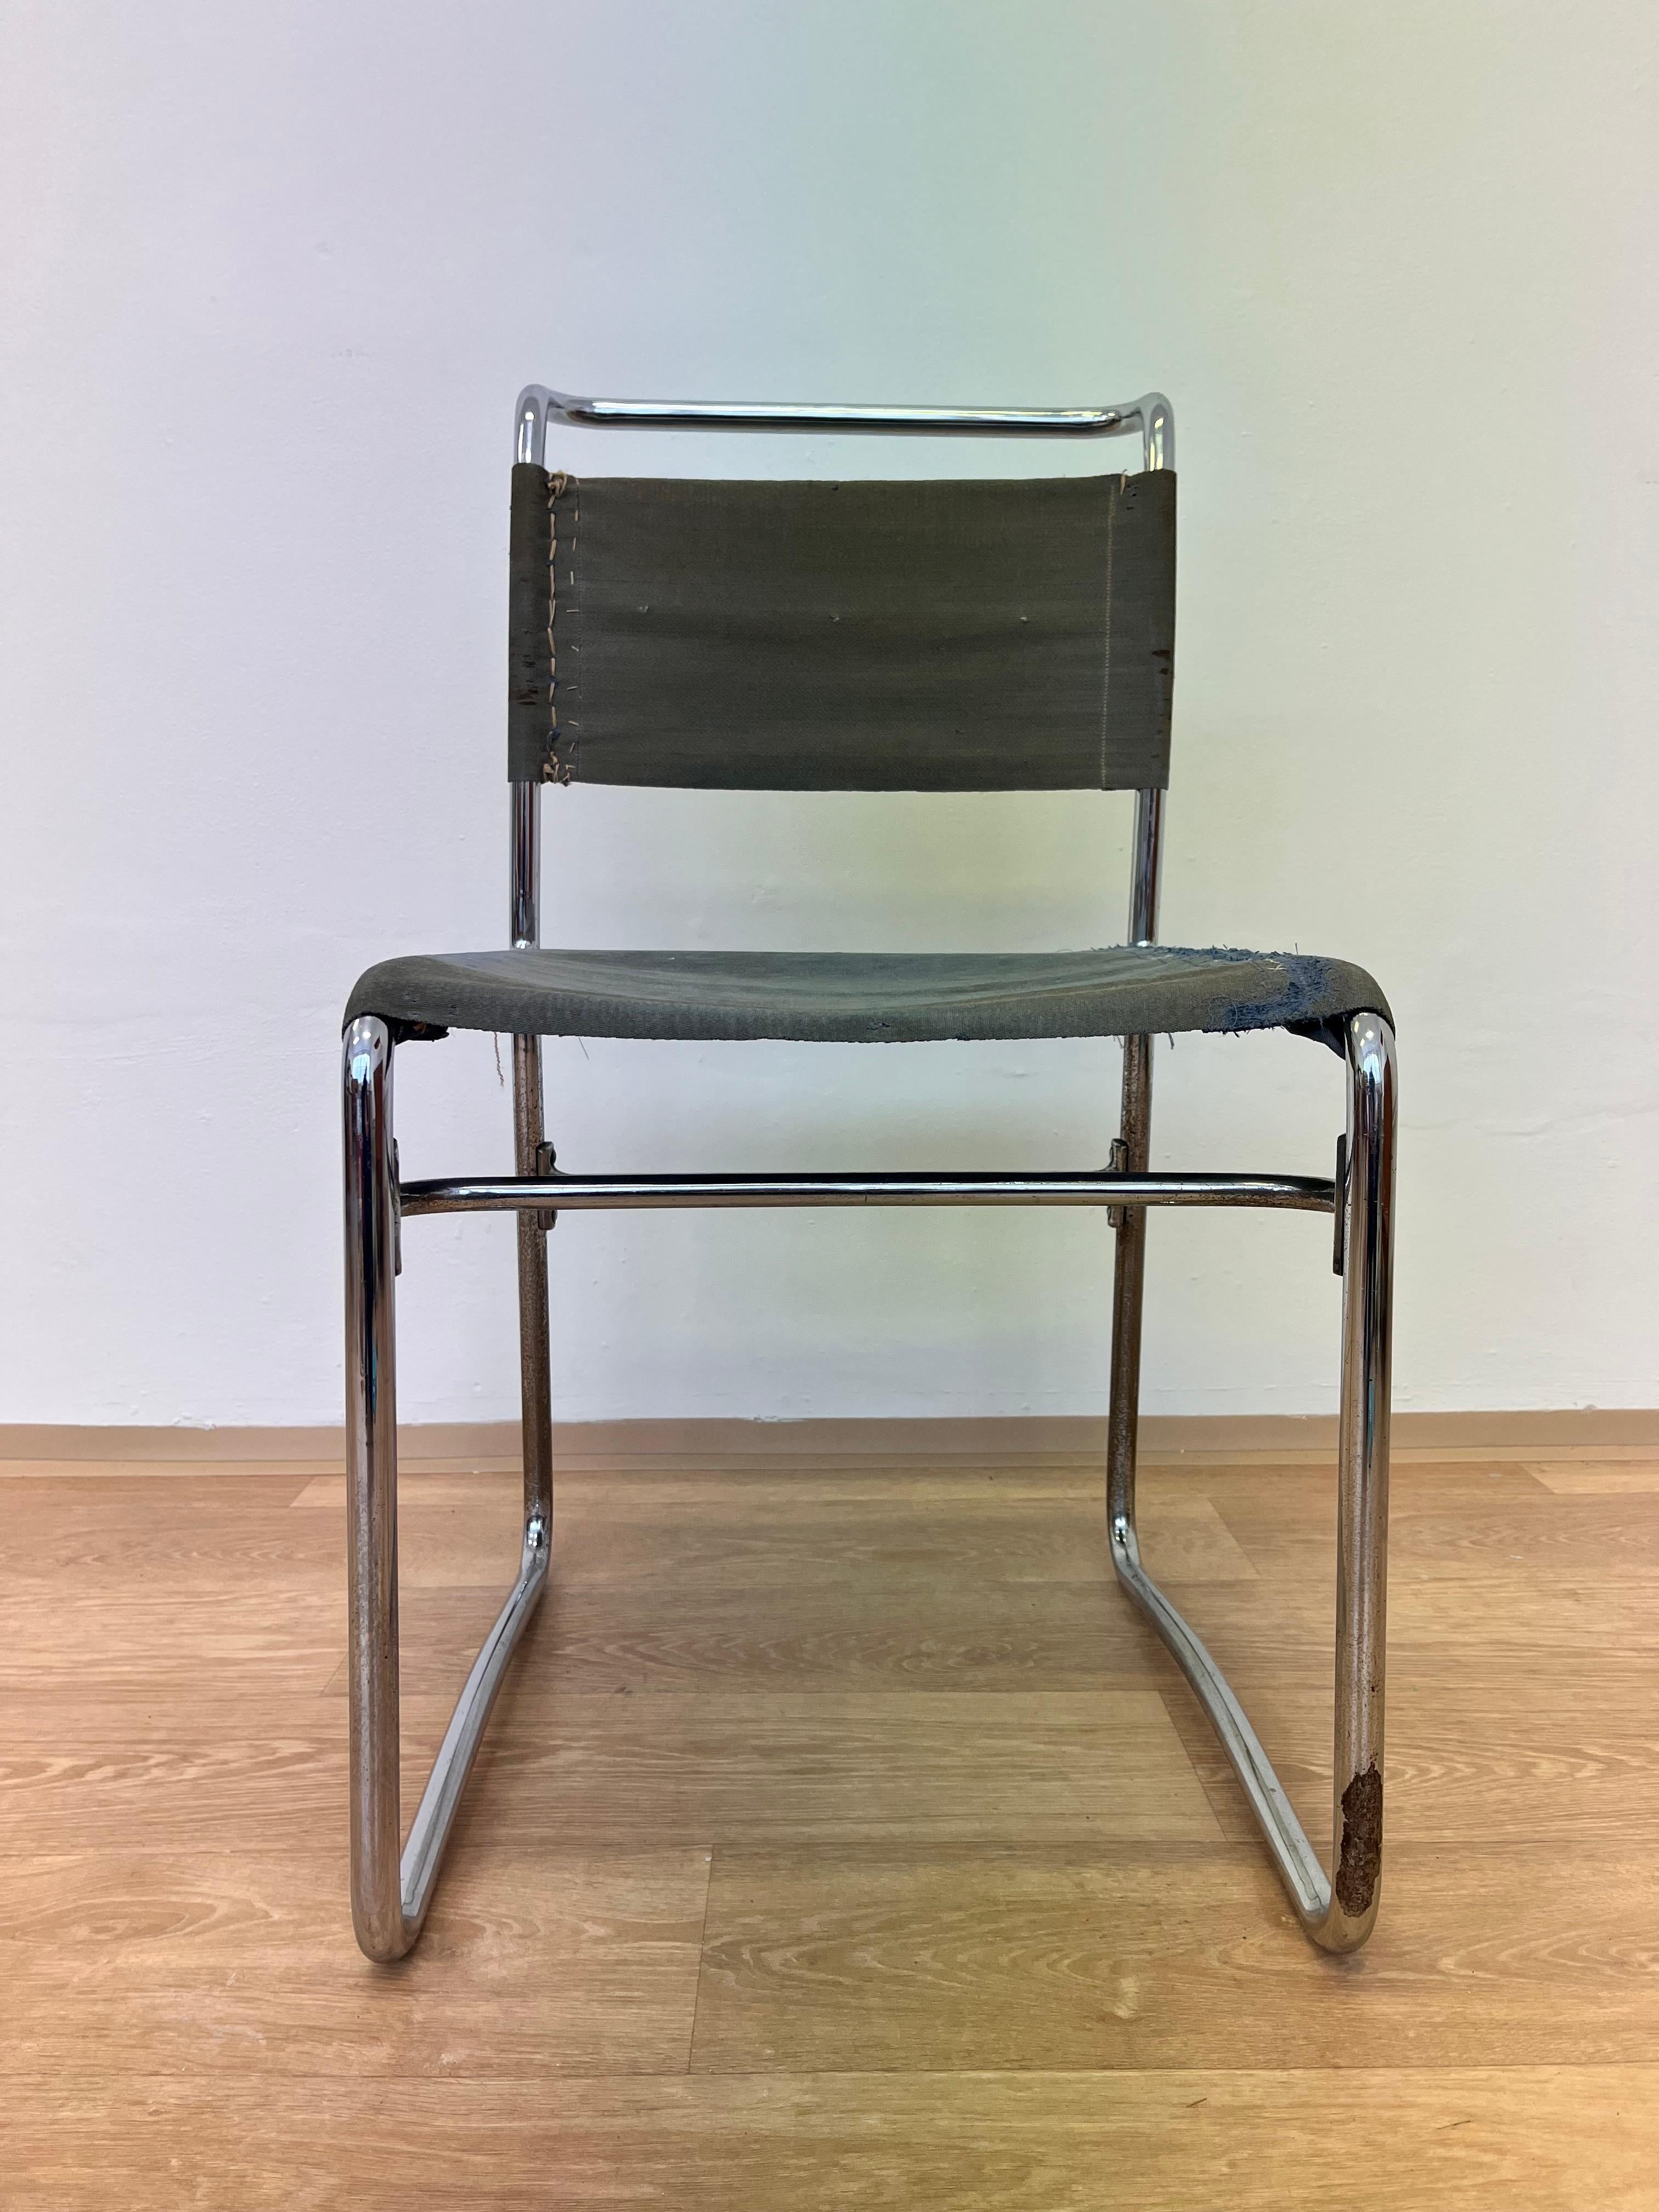 Tubular Steel Chrome Bauhaus Chair by Hynek Gottwald - 1930 (Eisengarn) For Sale 2